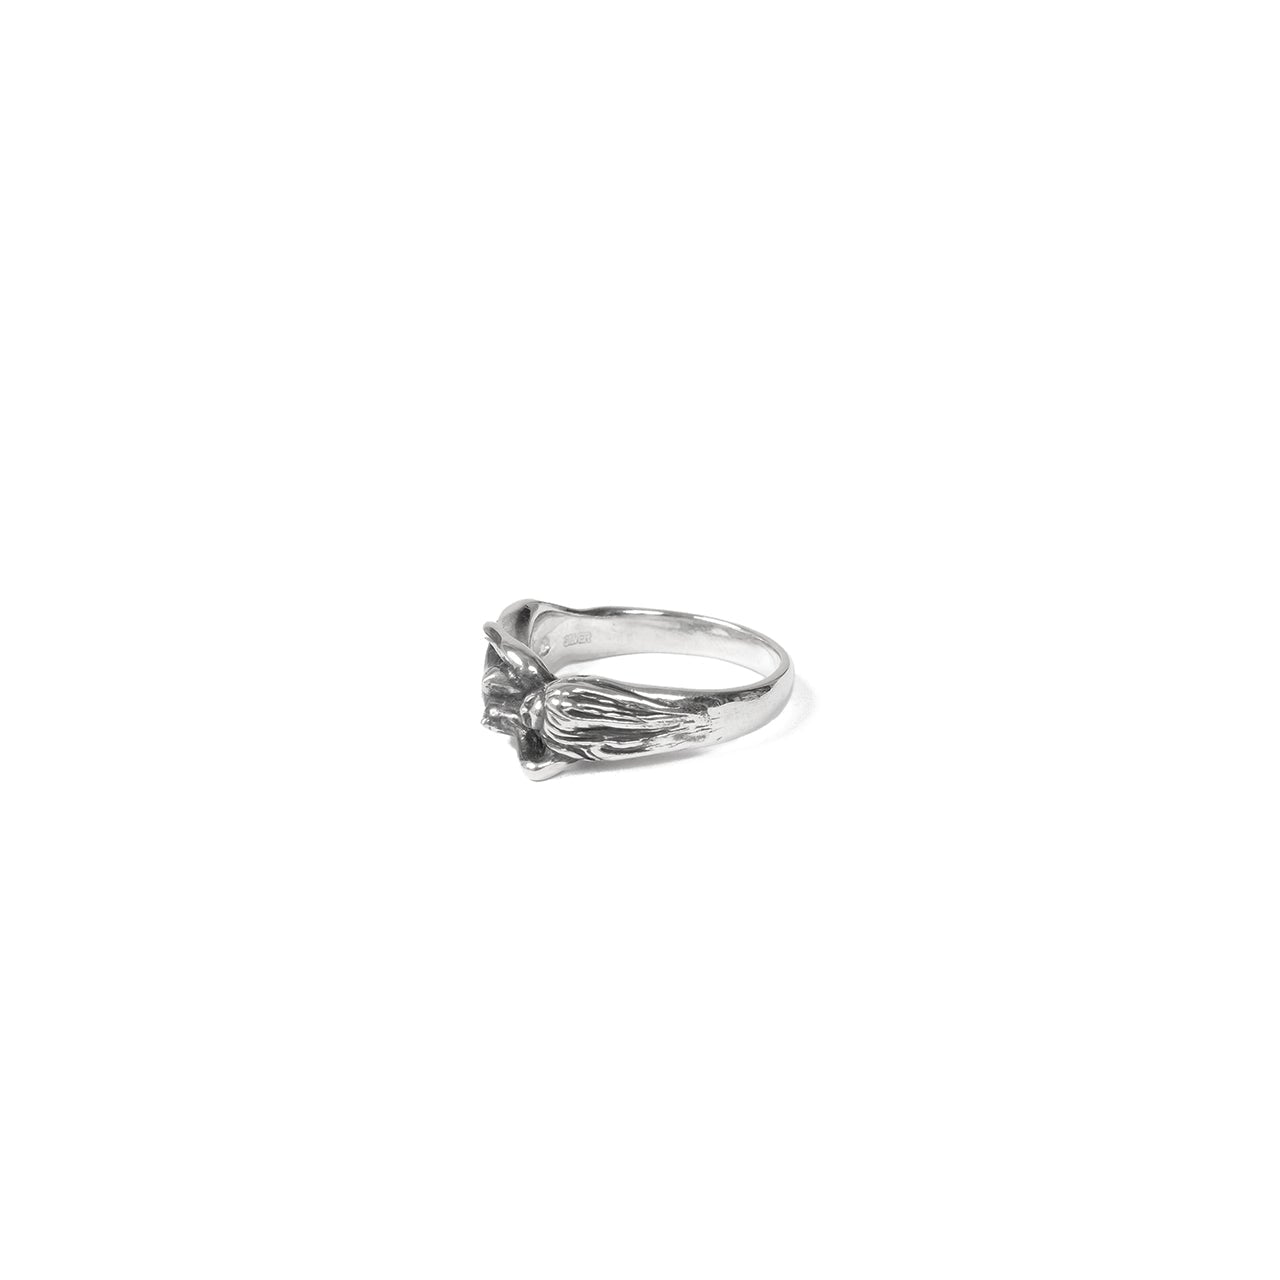 wacko maria nude ring (silver) WMGP-RG01-9 - a.plus